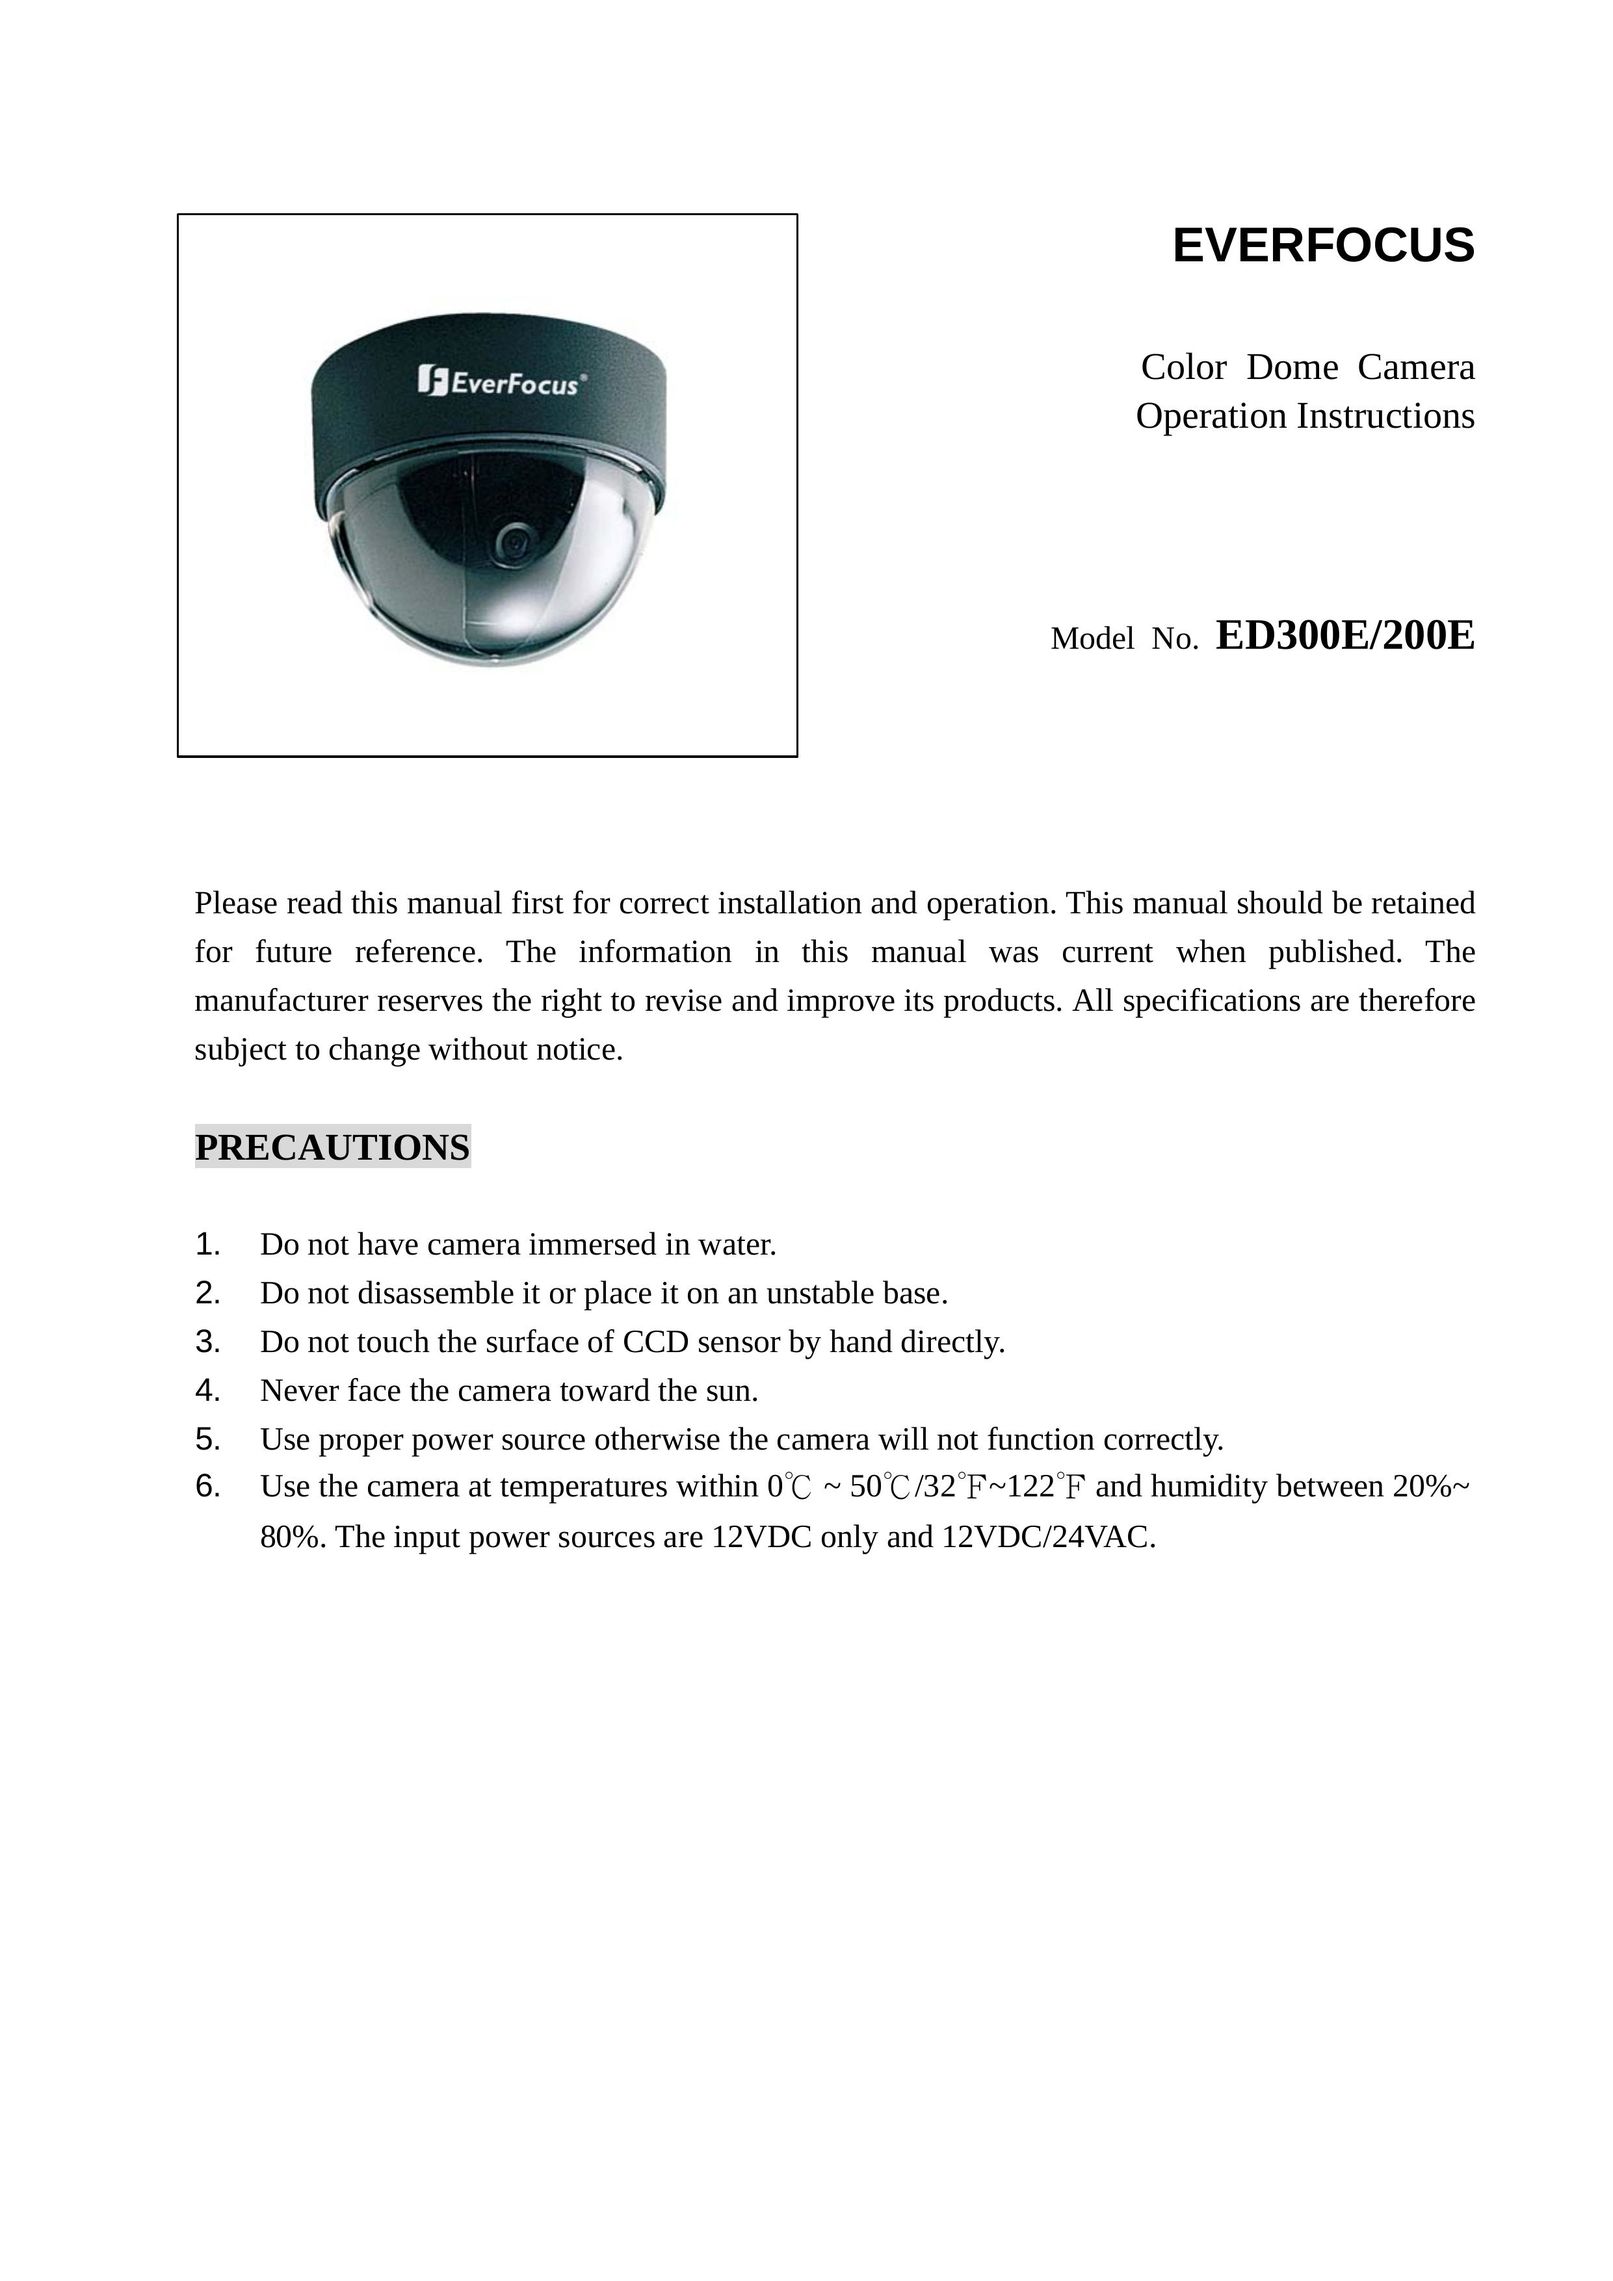 EverFocus ED300E Home Security System User Manual